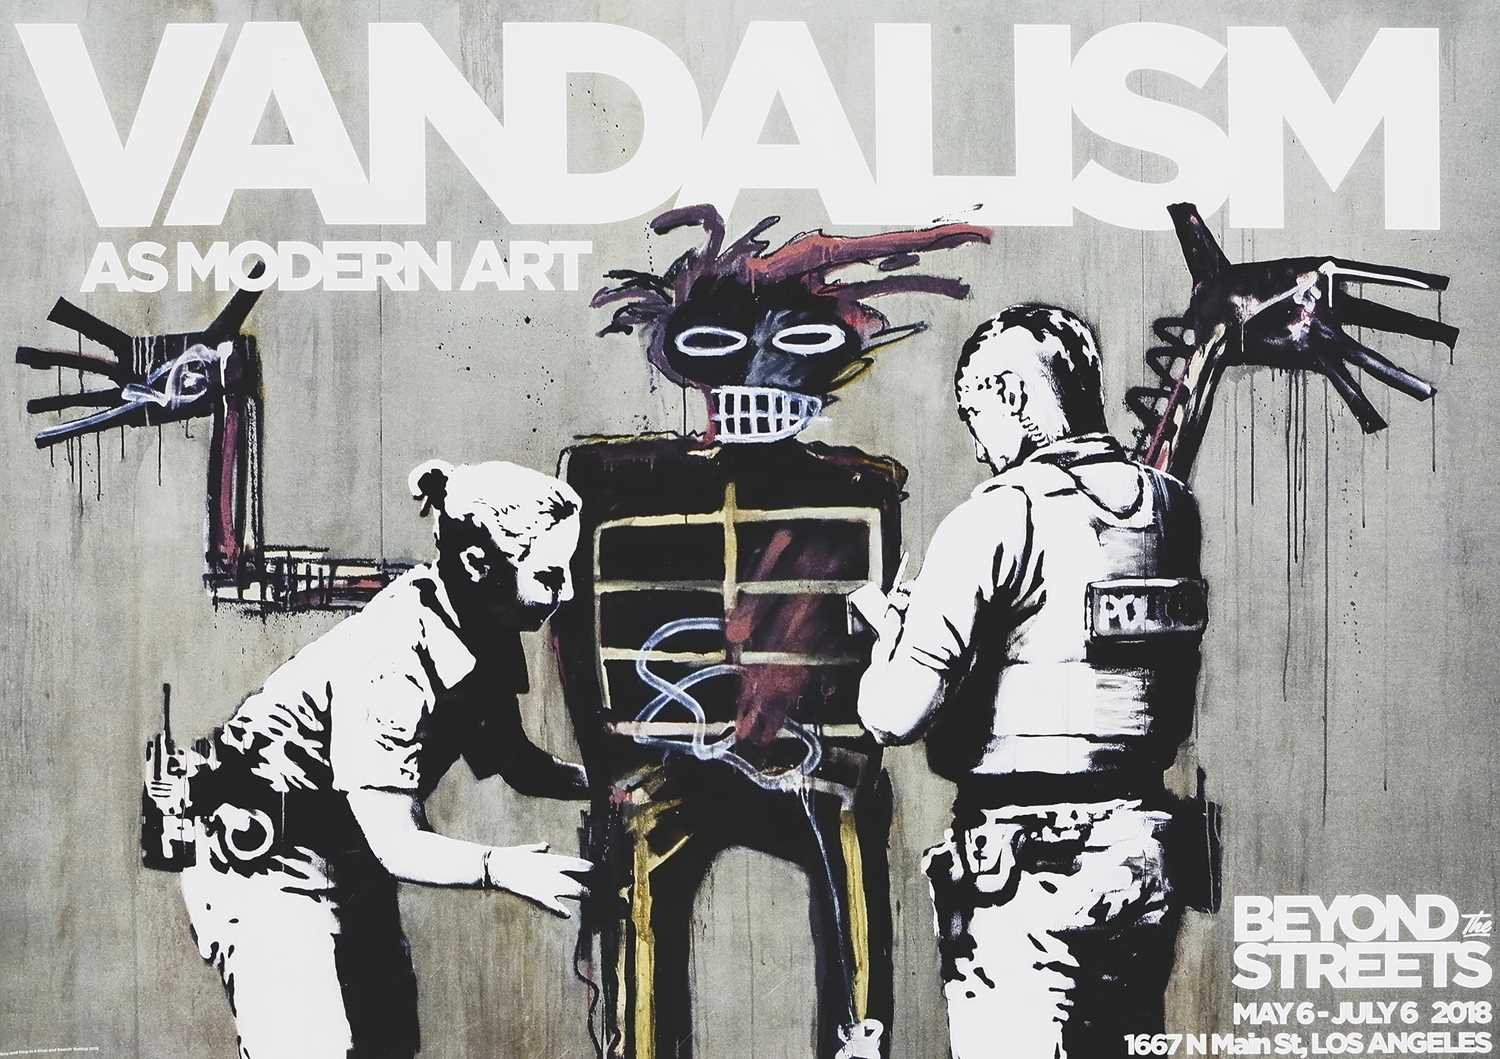 Lot 85 - Banksy (British 1974-), 'Vandalism As Modern Art', 2018